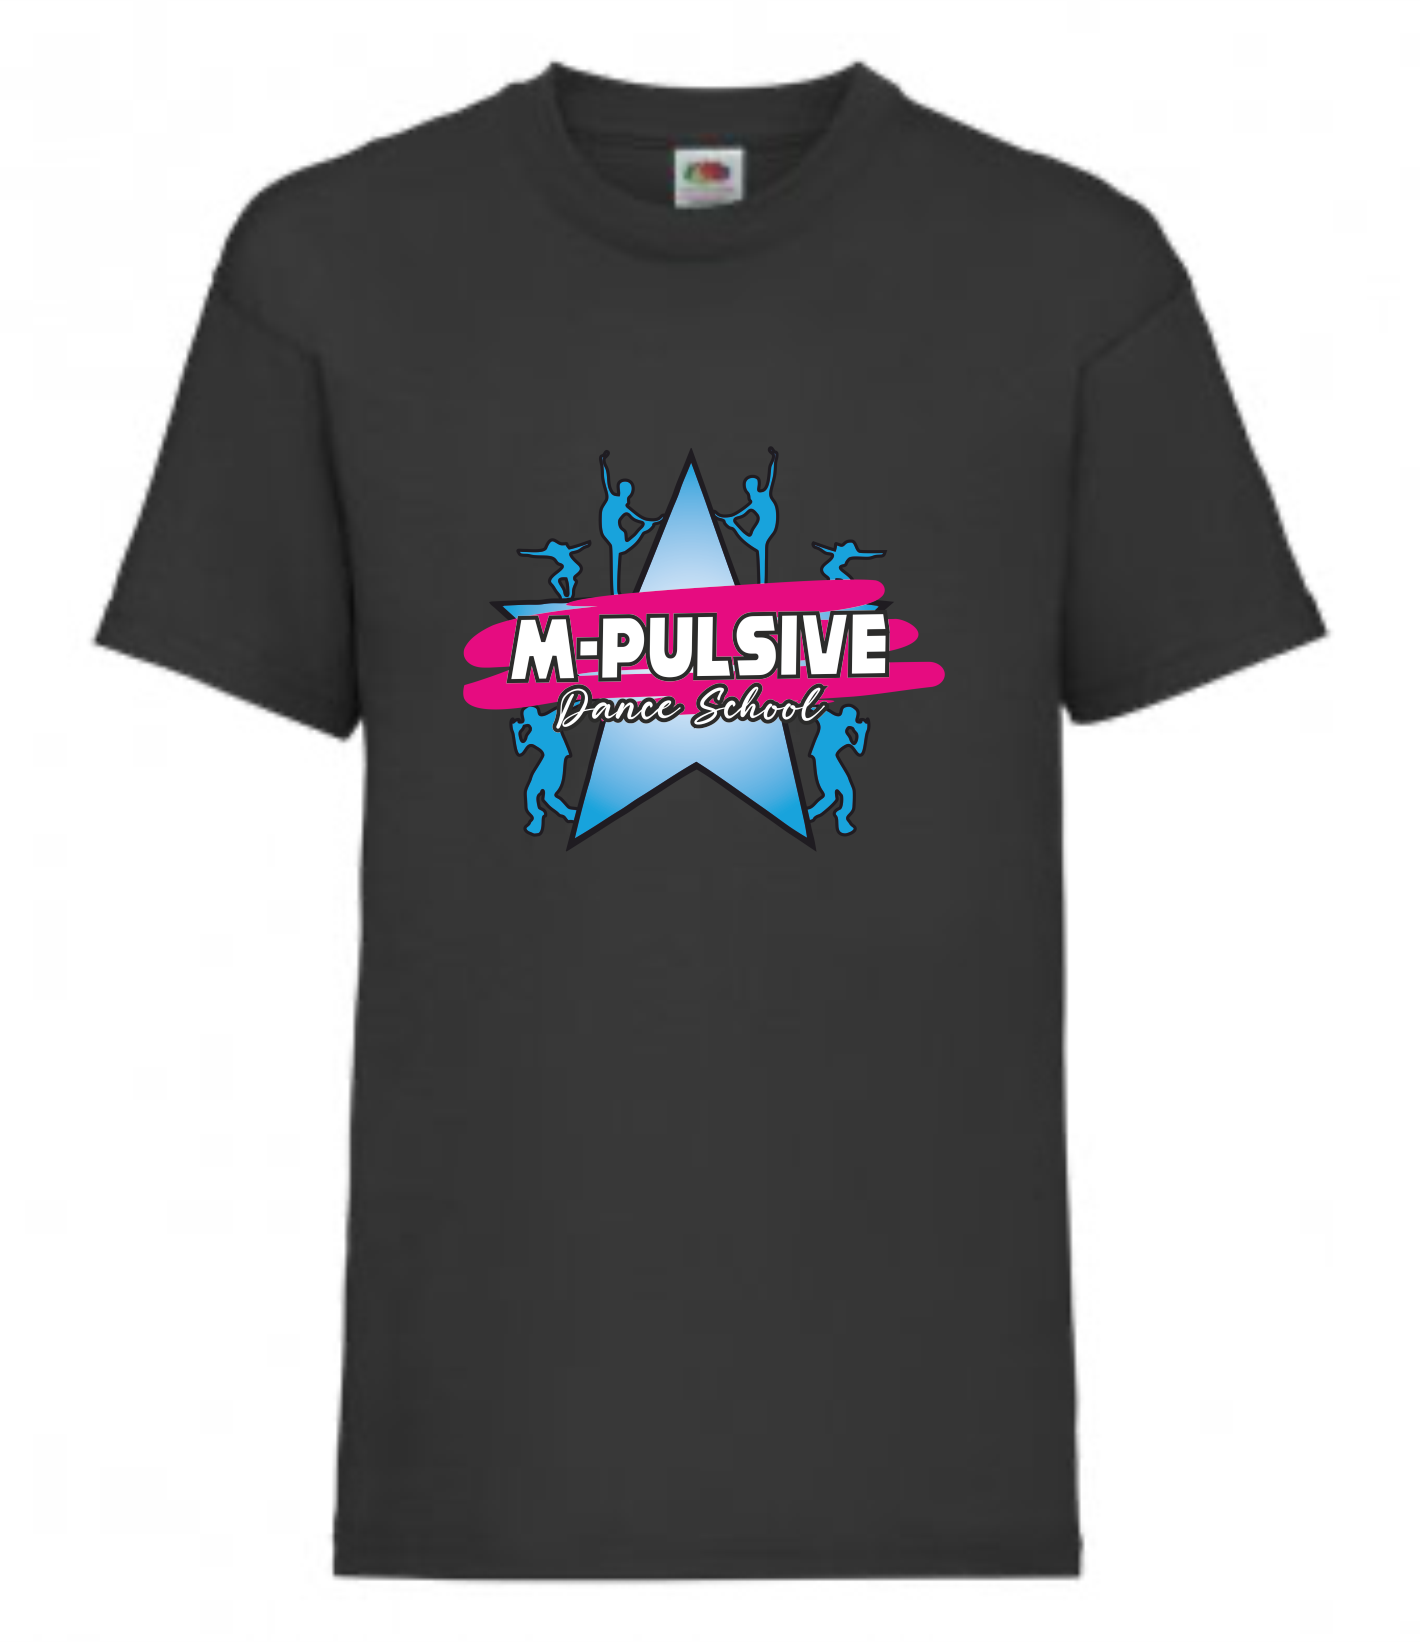 M-Pulsive T-shirt (adults sizes)